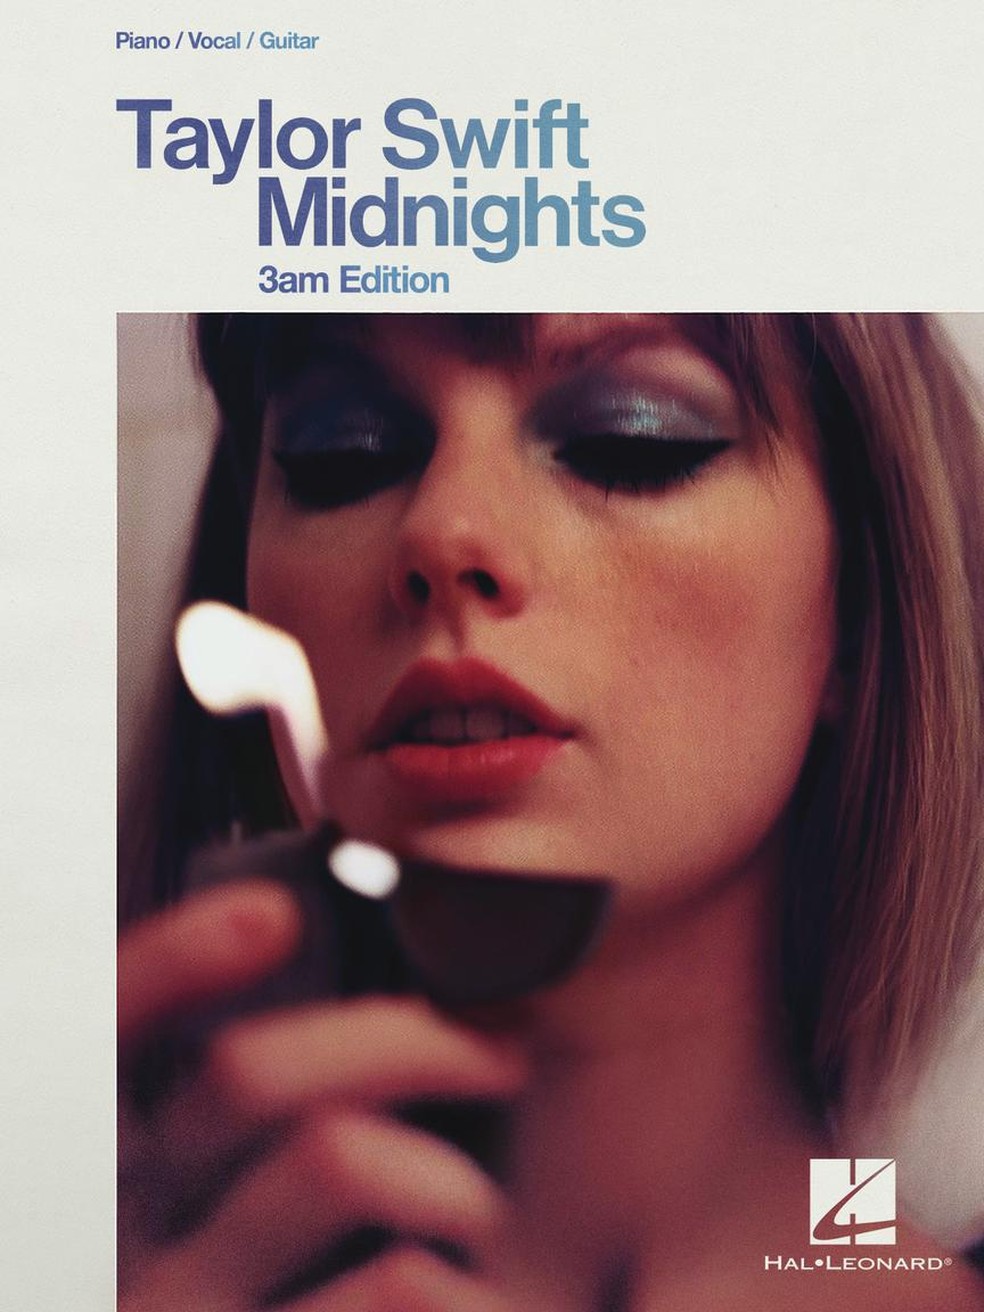 Capa do álbum "Midnights" — Foto: Reprodução